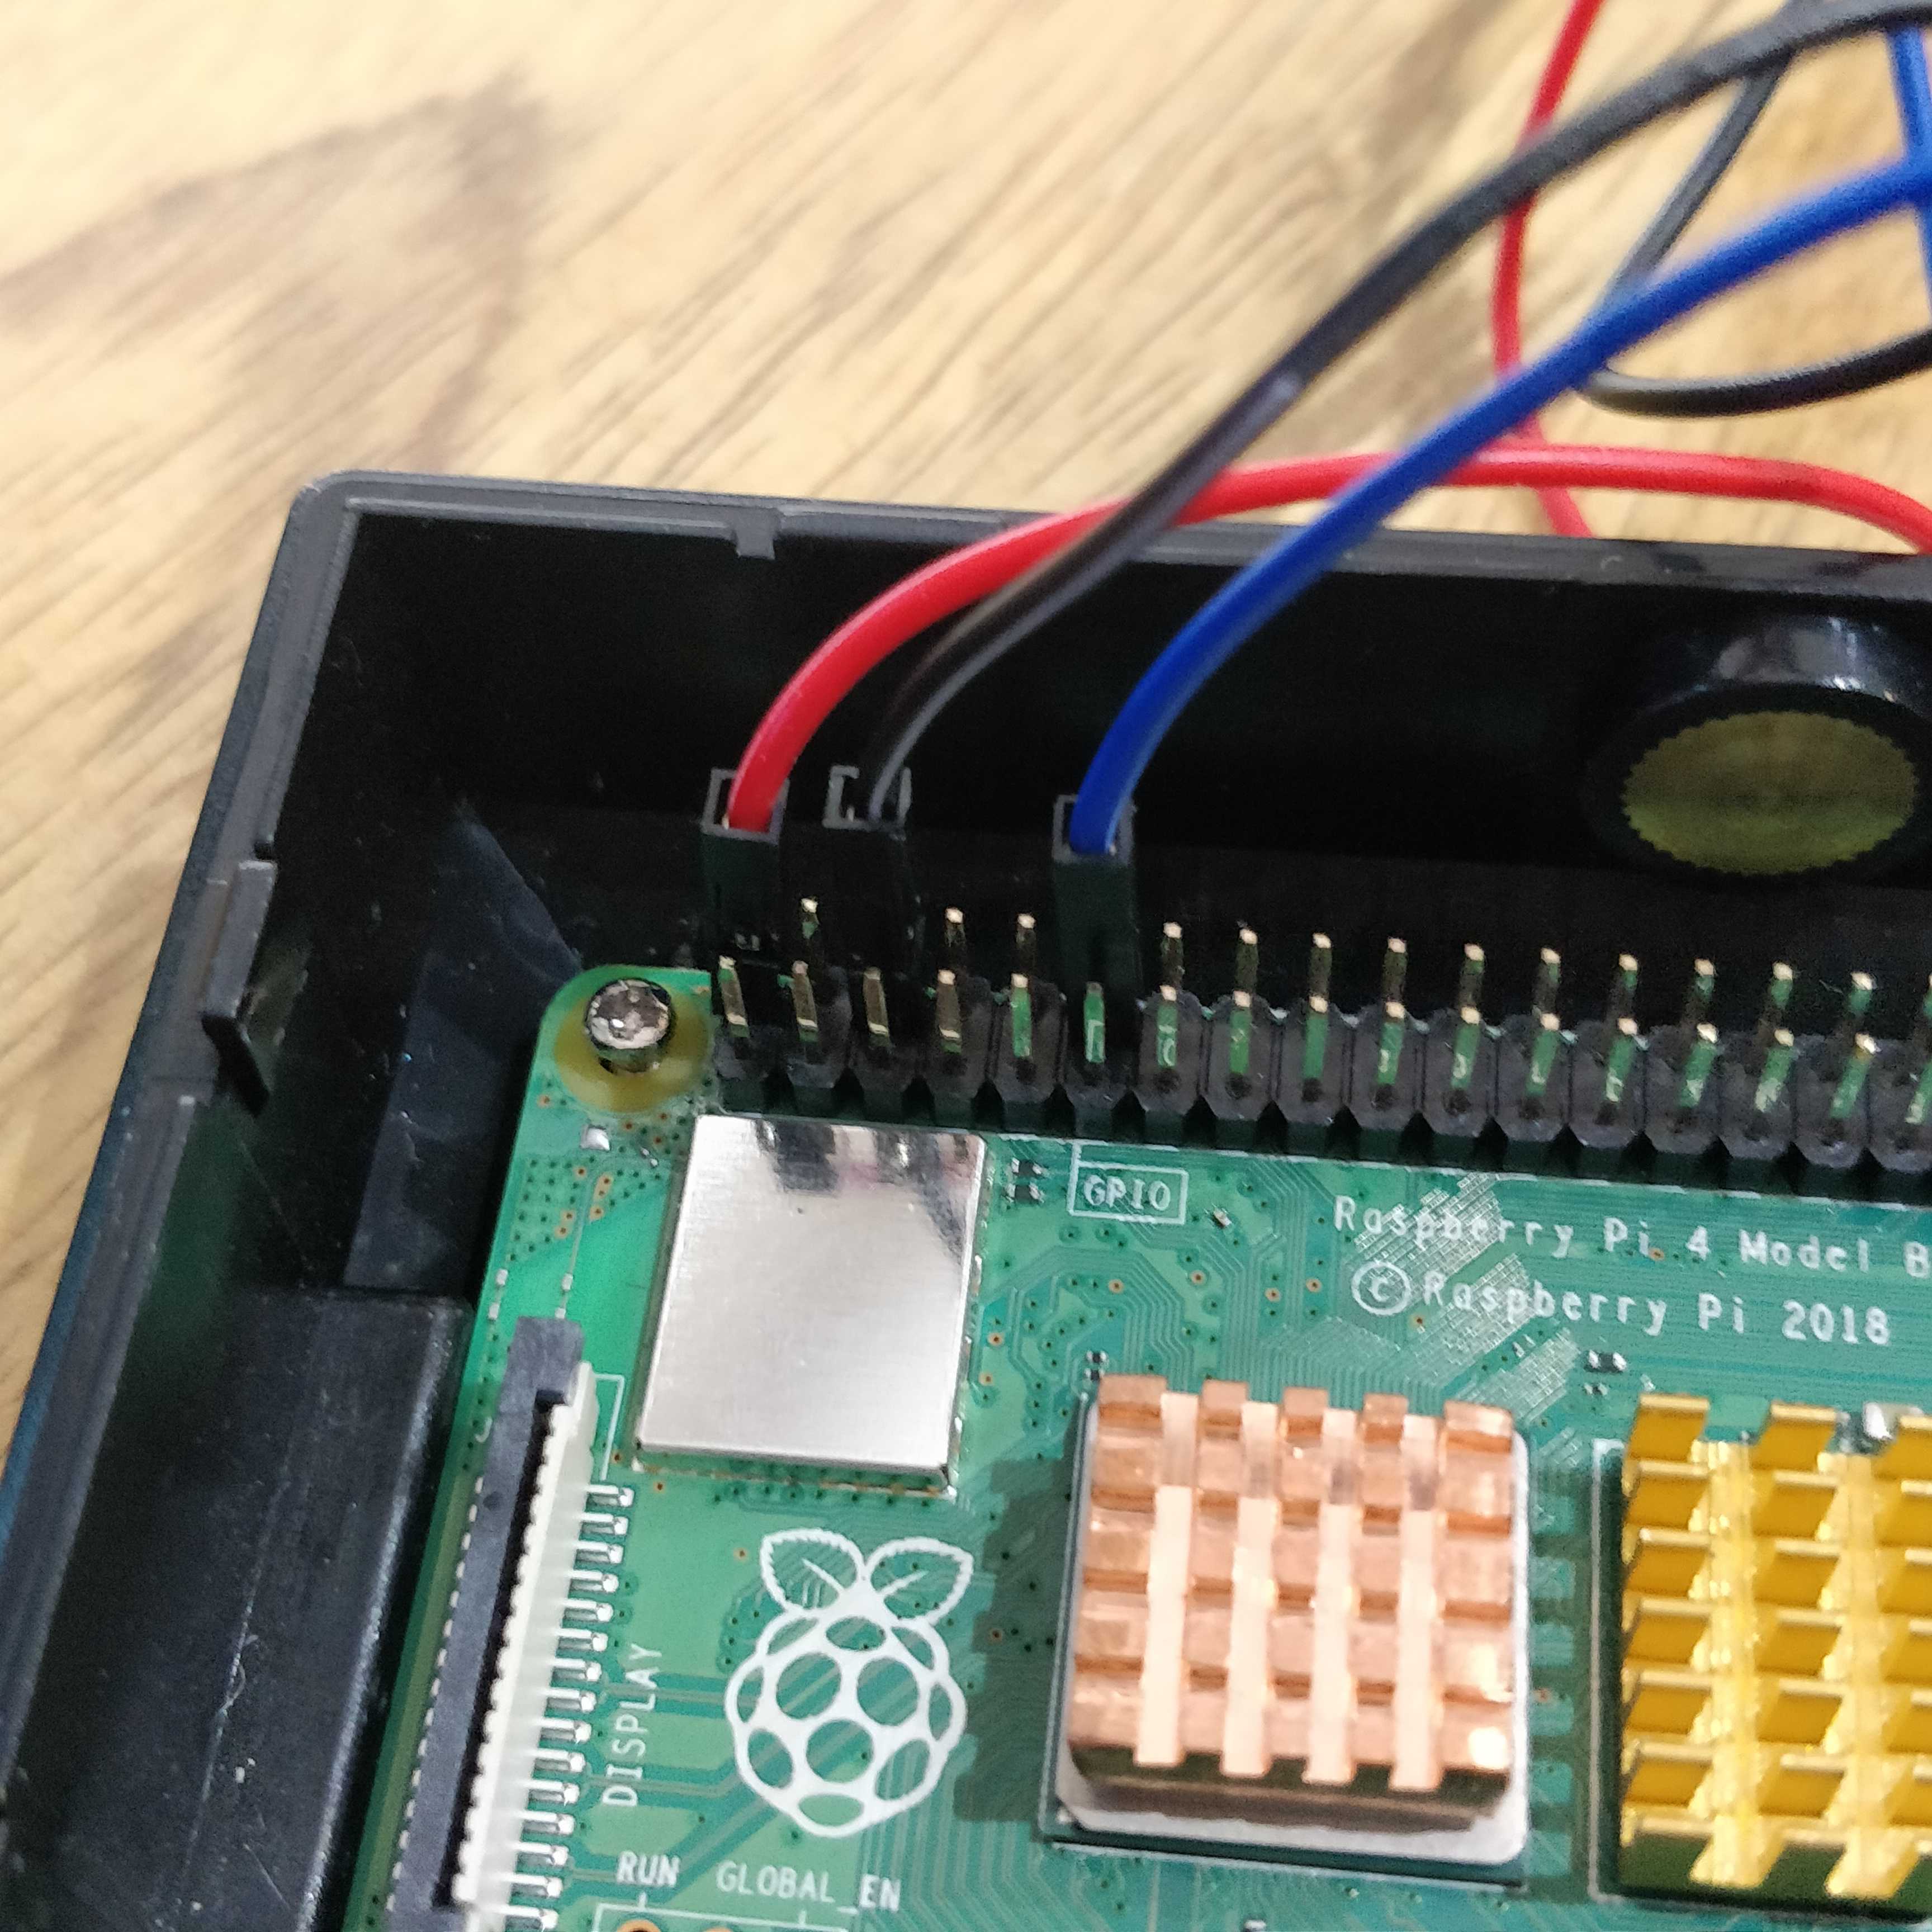 Wiring Sensor to Raspberry Pi Pt2